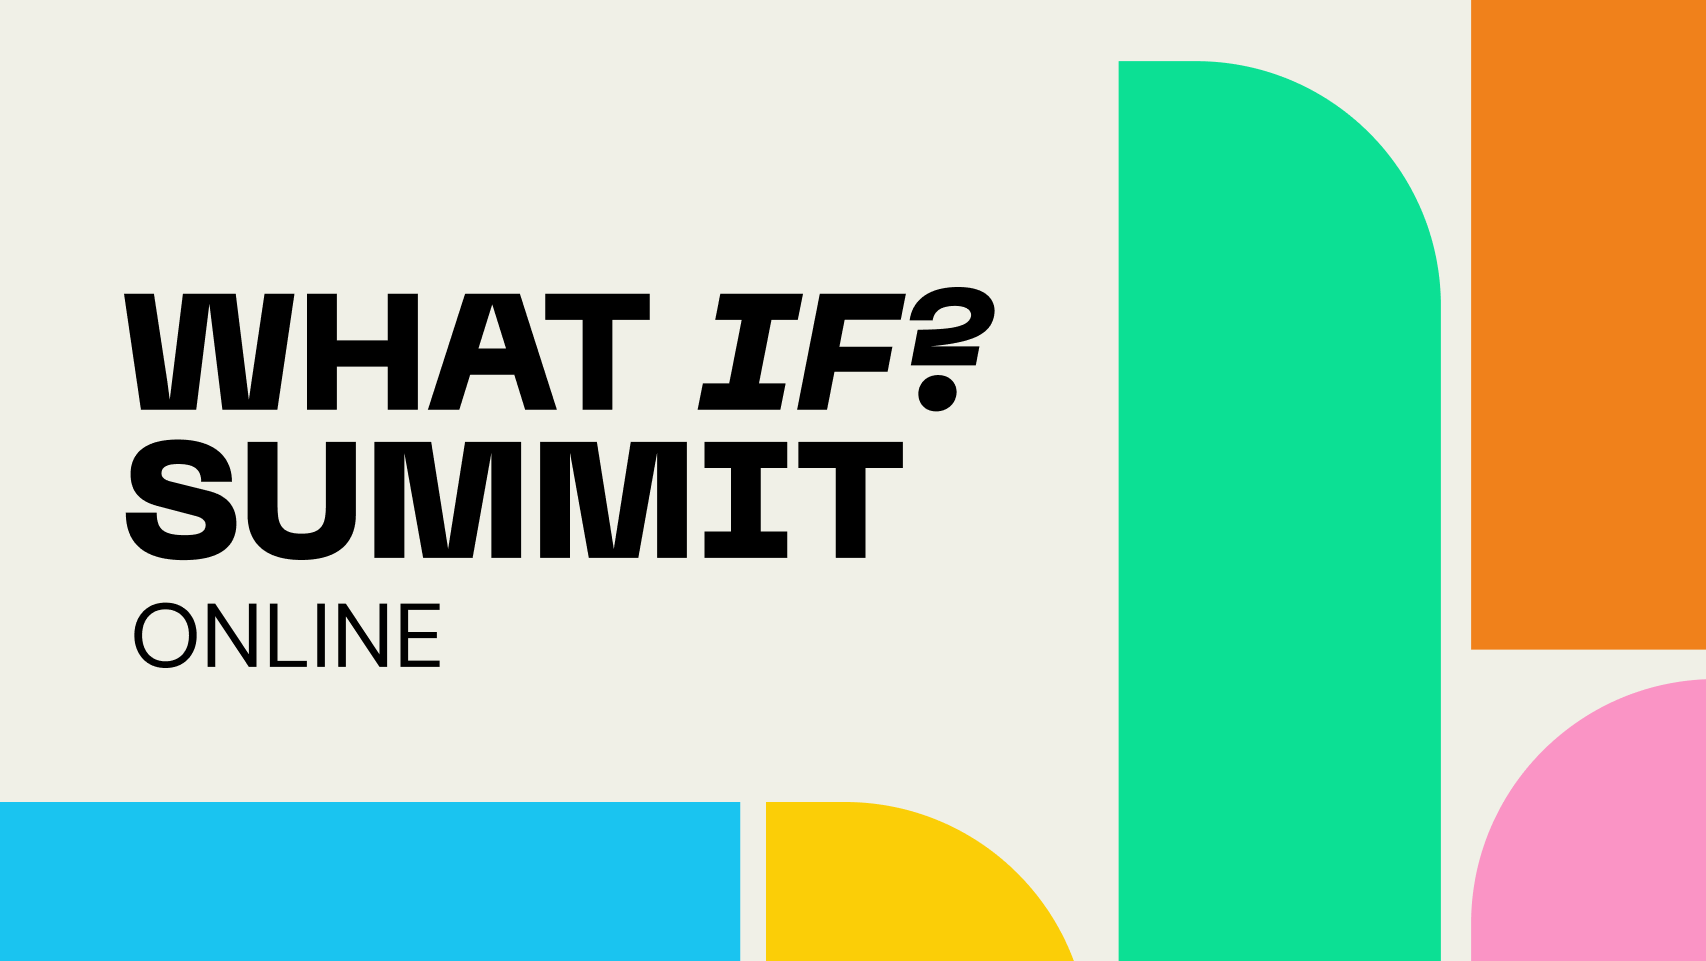 What IF? Summit Online